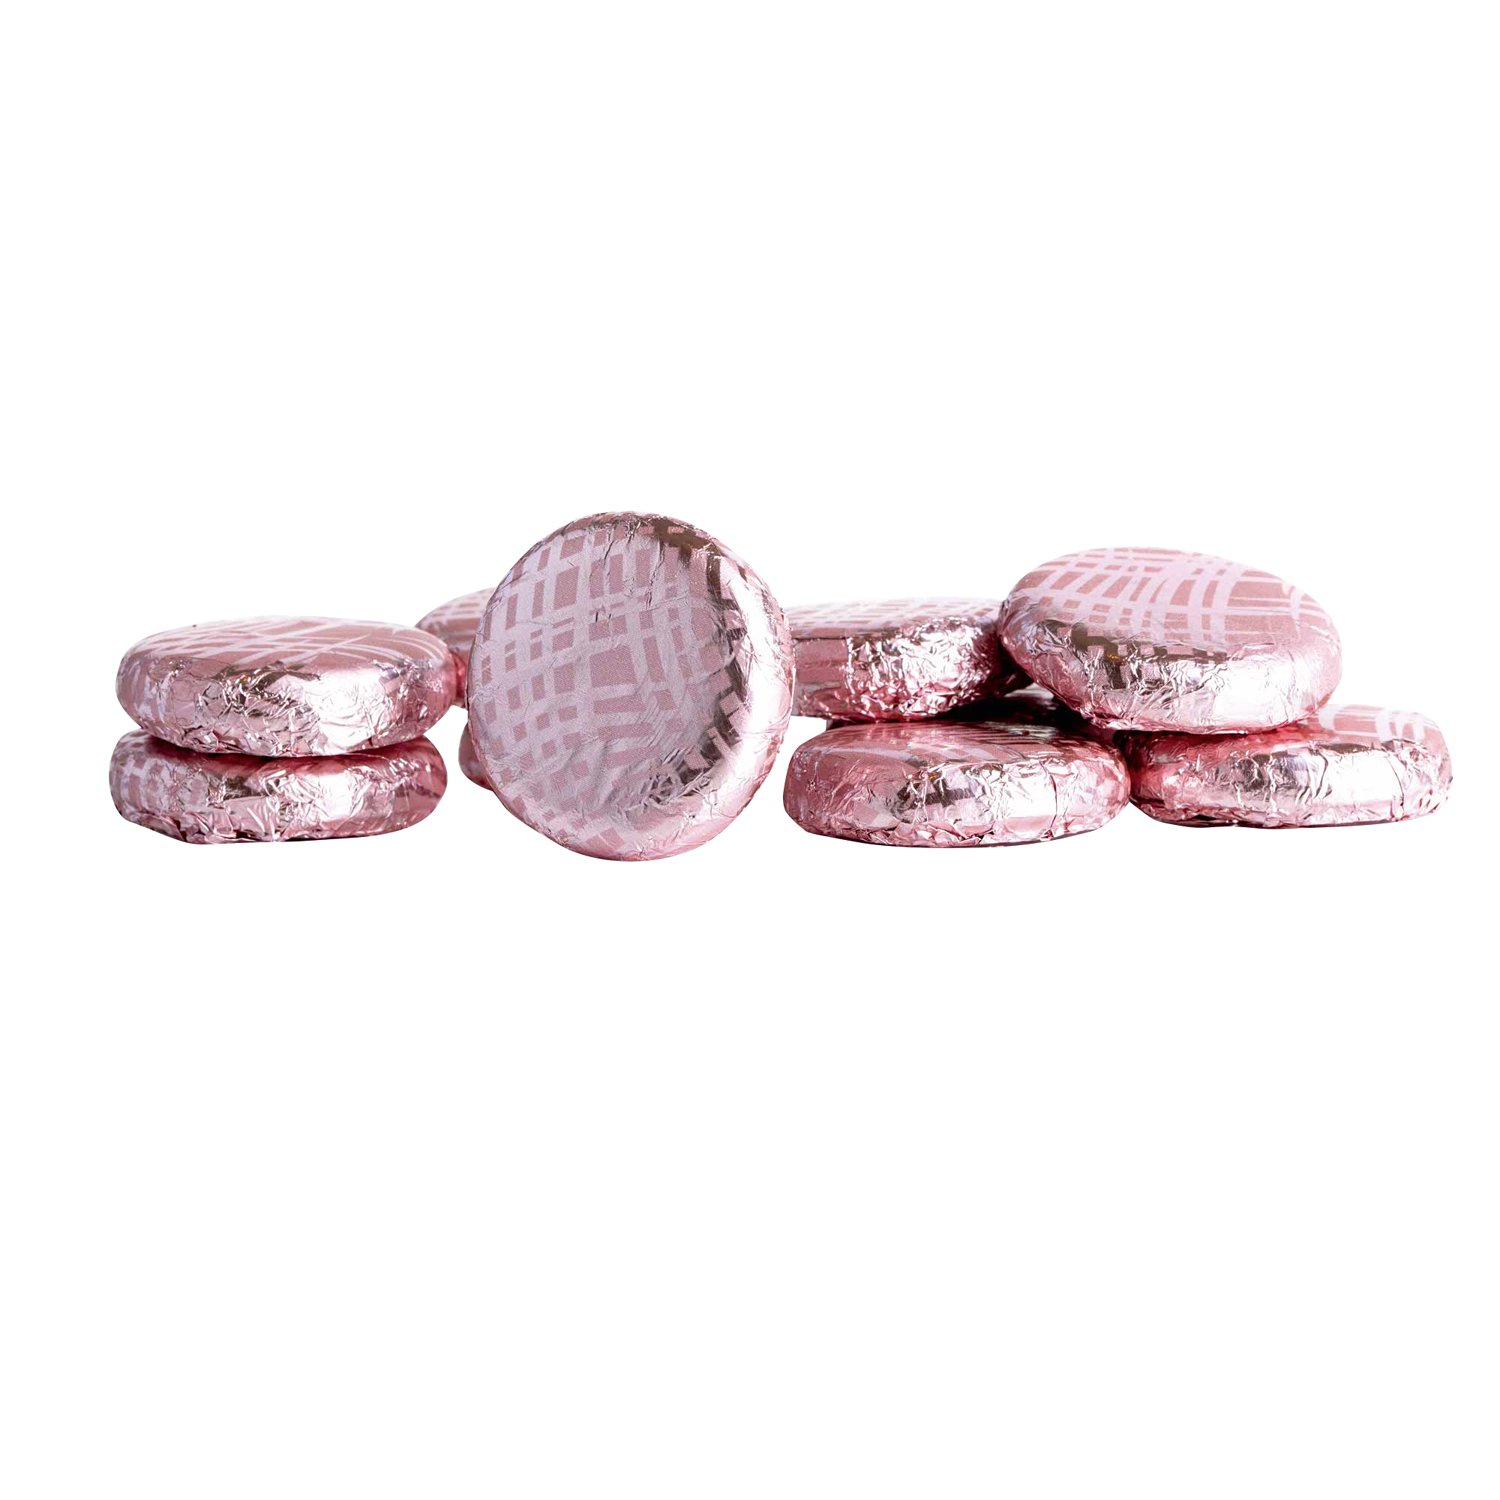 Rose crème - dark choc covered fondant in pink foil 120pcs - 1kg